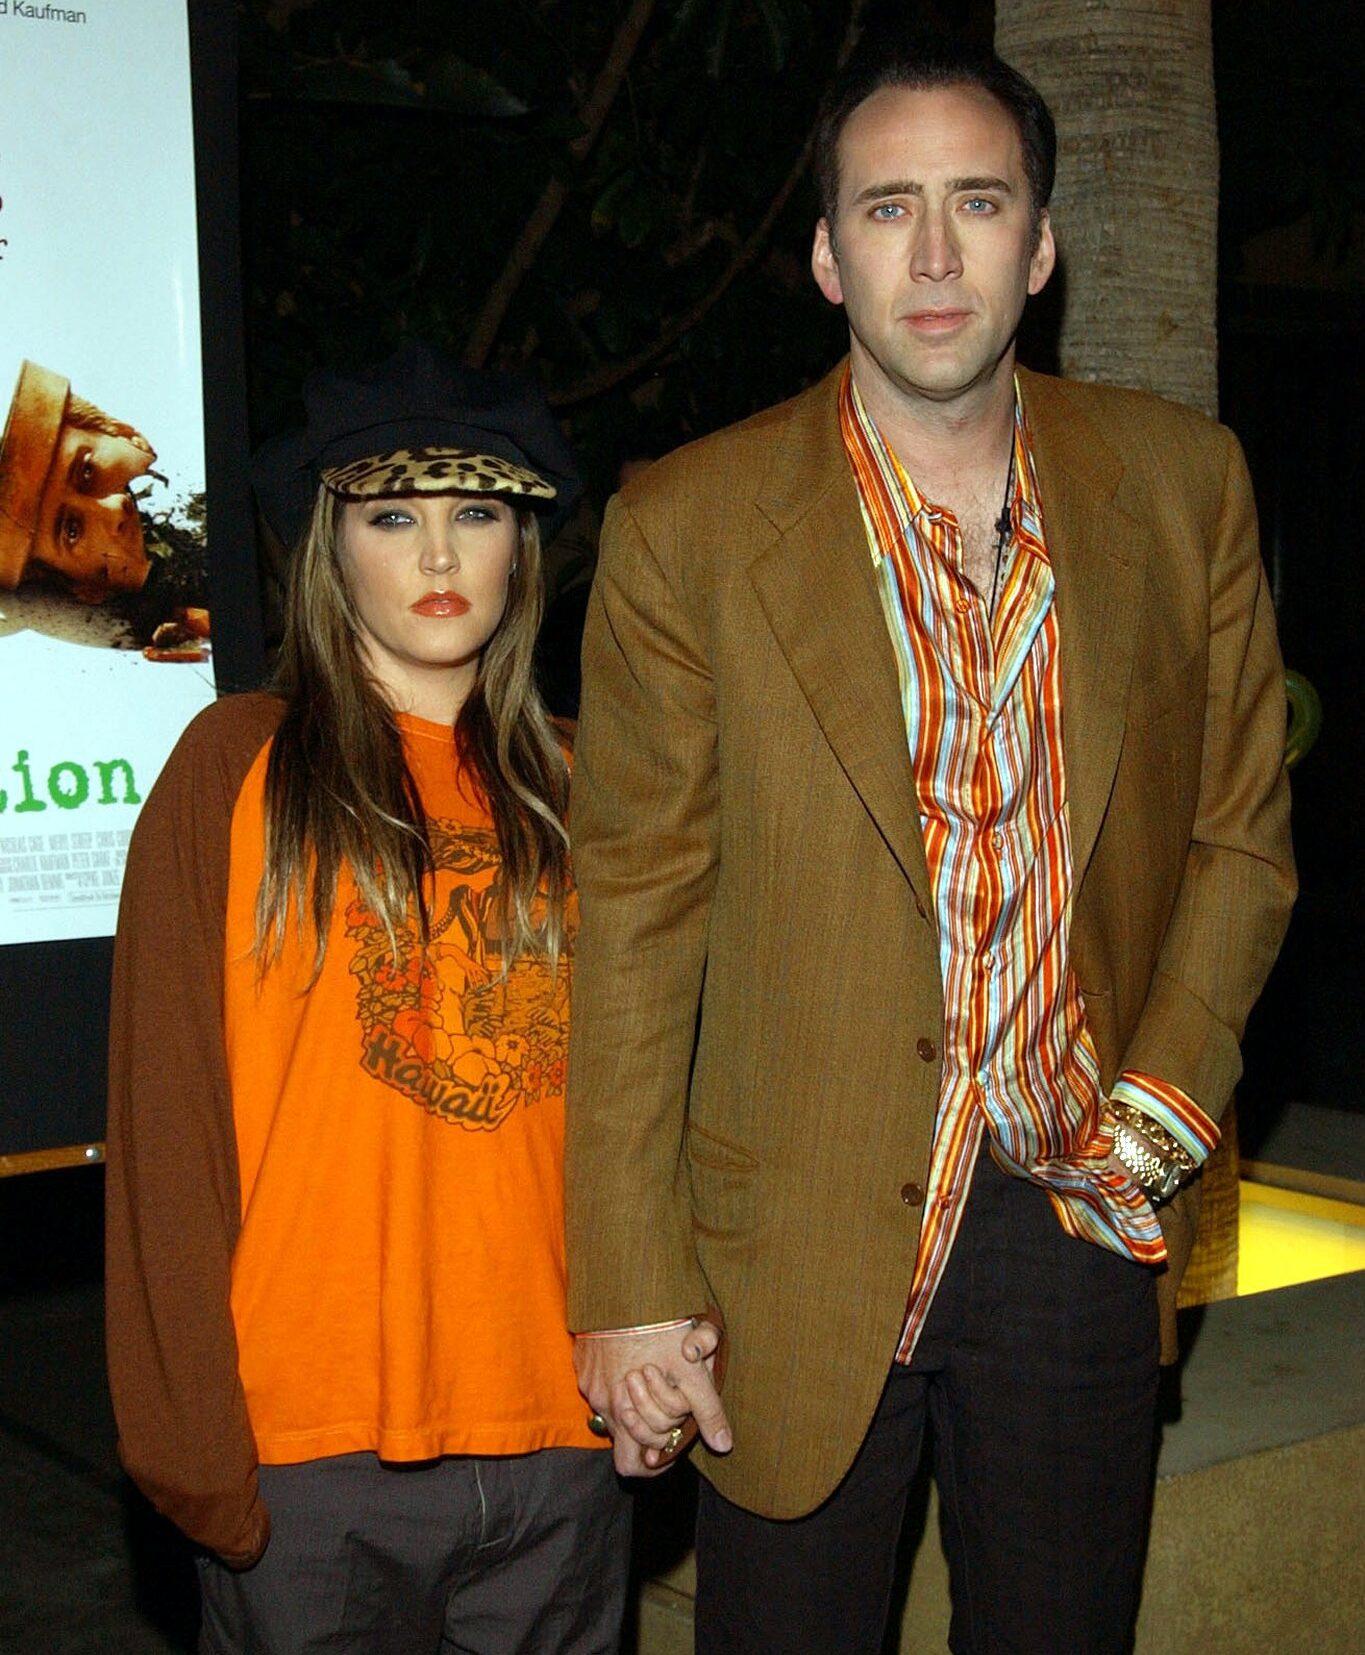 Lisa Marie Presley and Nicolas Cage arrive before American Cinematheque presents a sneak peek screening of "Adaptation," Saturday November 23, 2002 in Los Angeles, California.